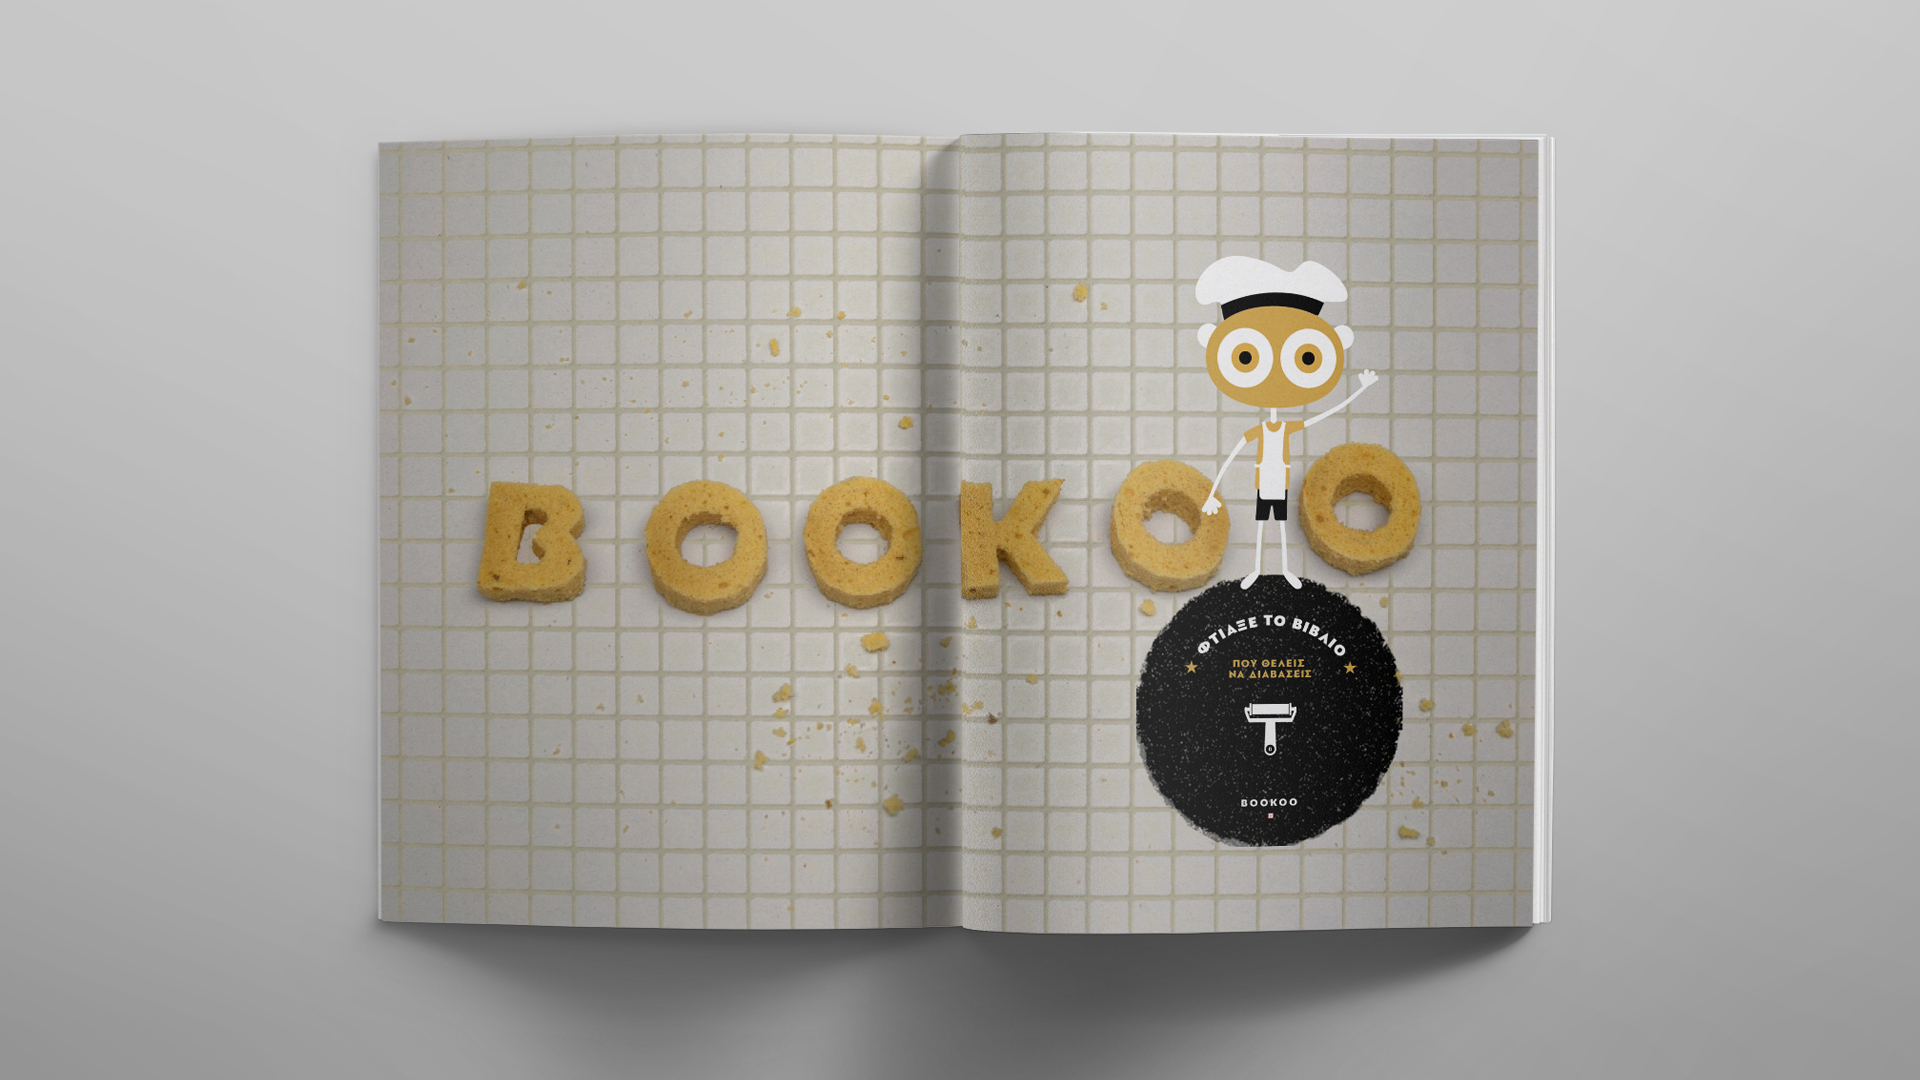 designpark_bookoo_press_kit_book_design